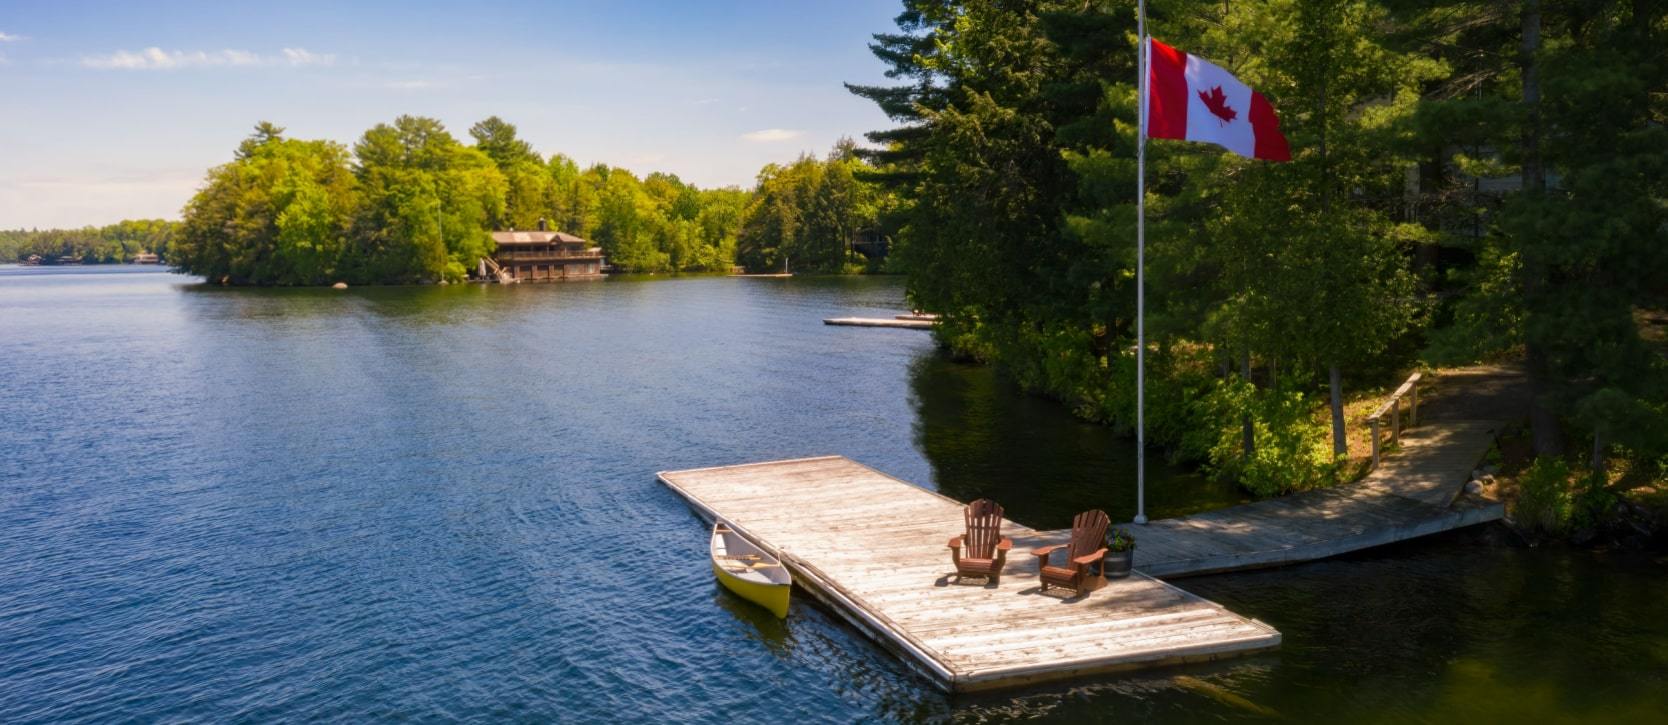 Lake and dock in Muskoka, Ontario